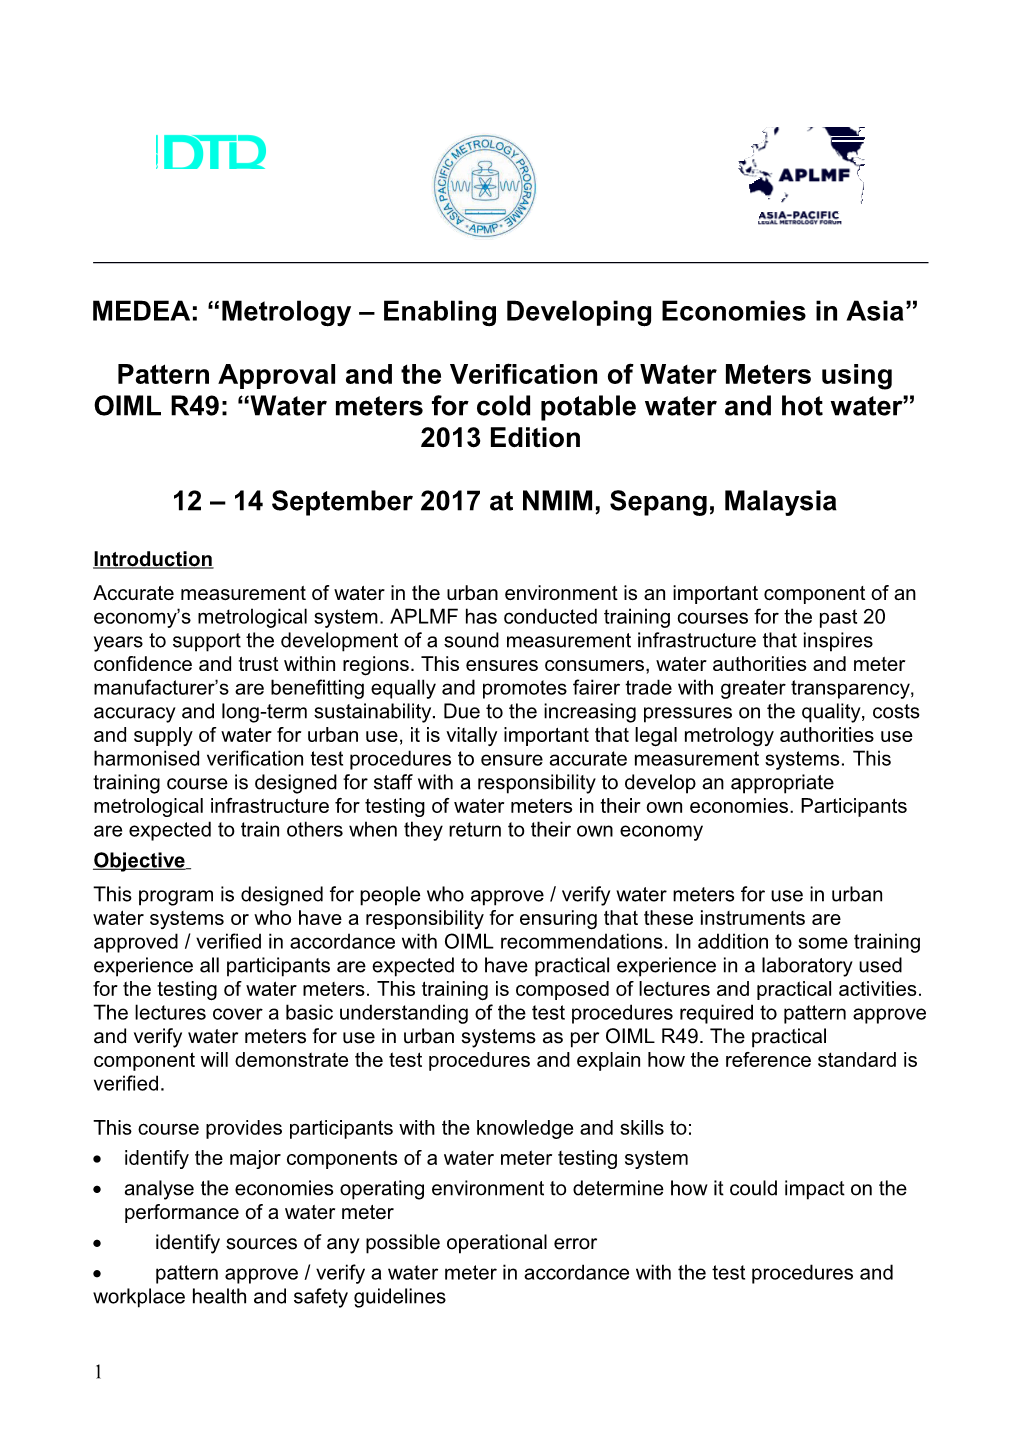 MEDEA: Metrology Enabling Developing Economies in Asia